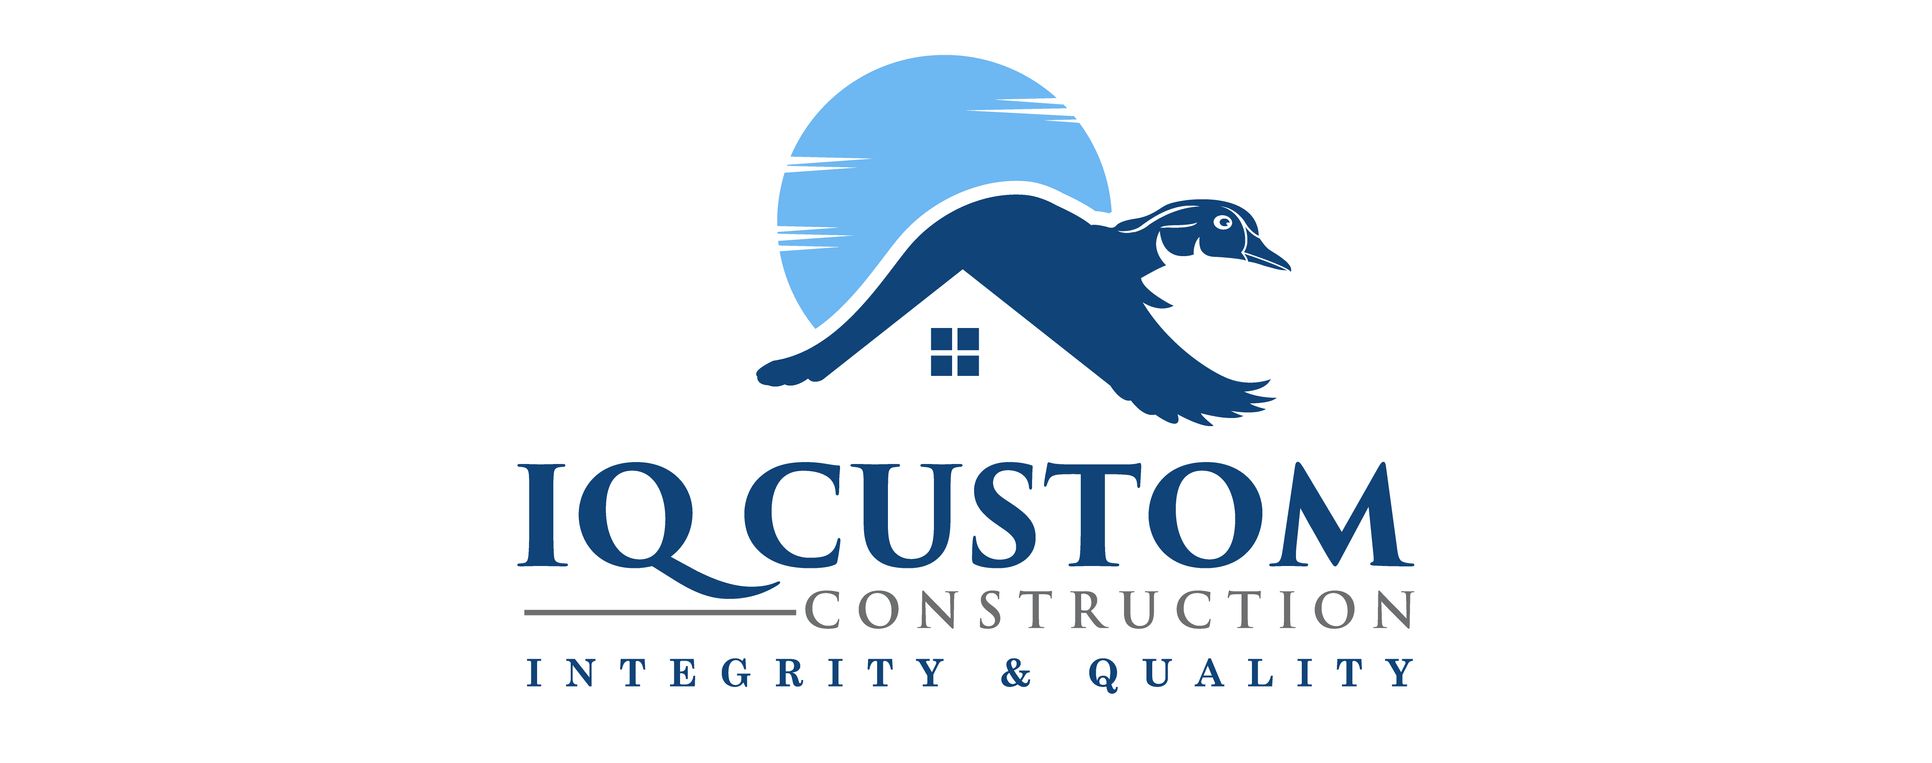 Iq Custom Construction,28117